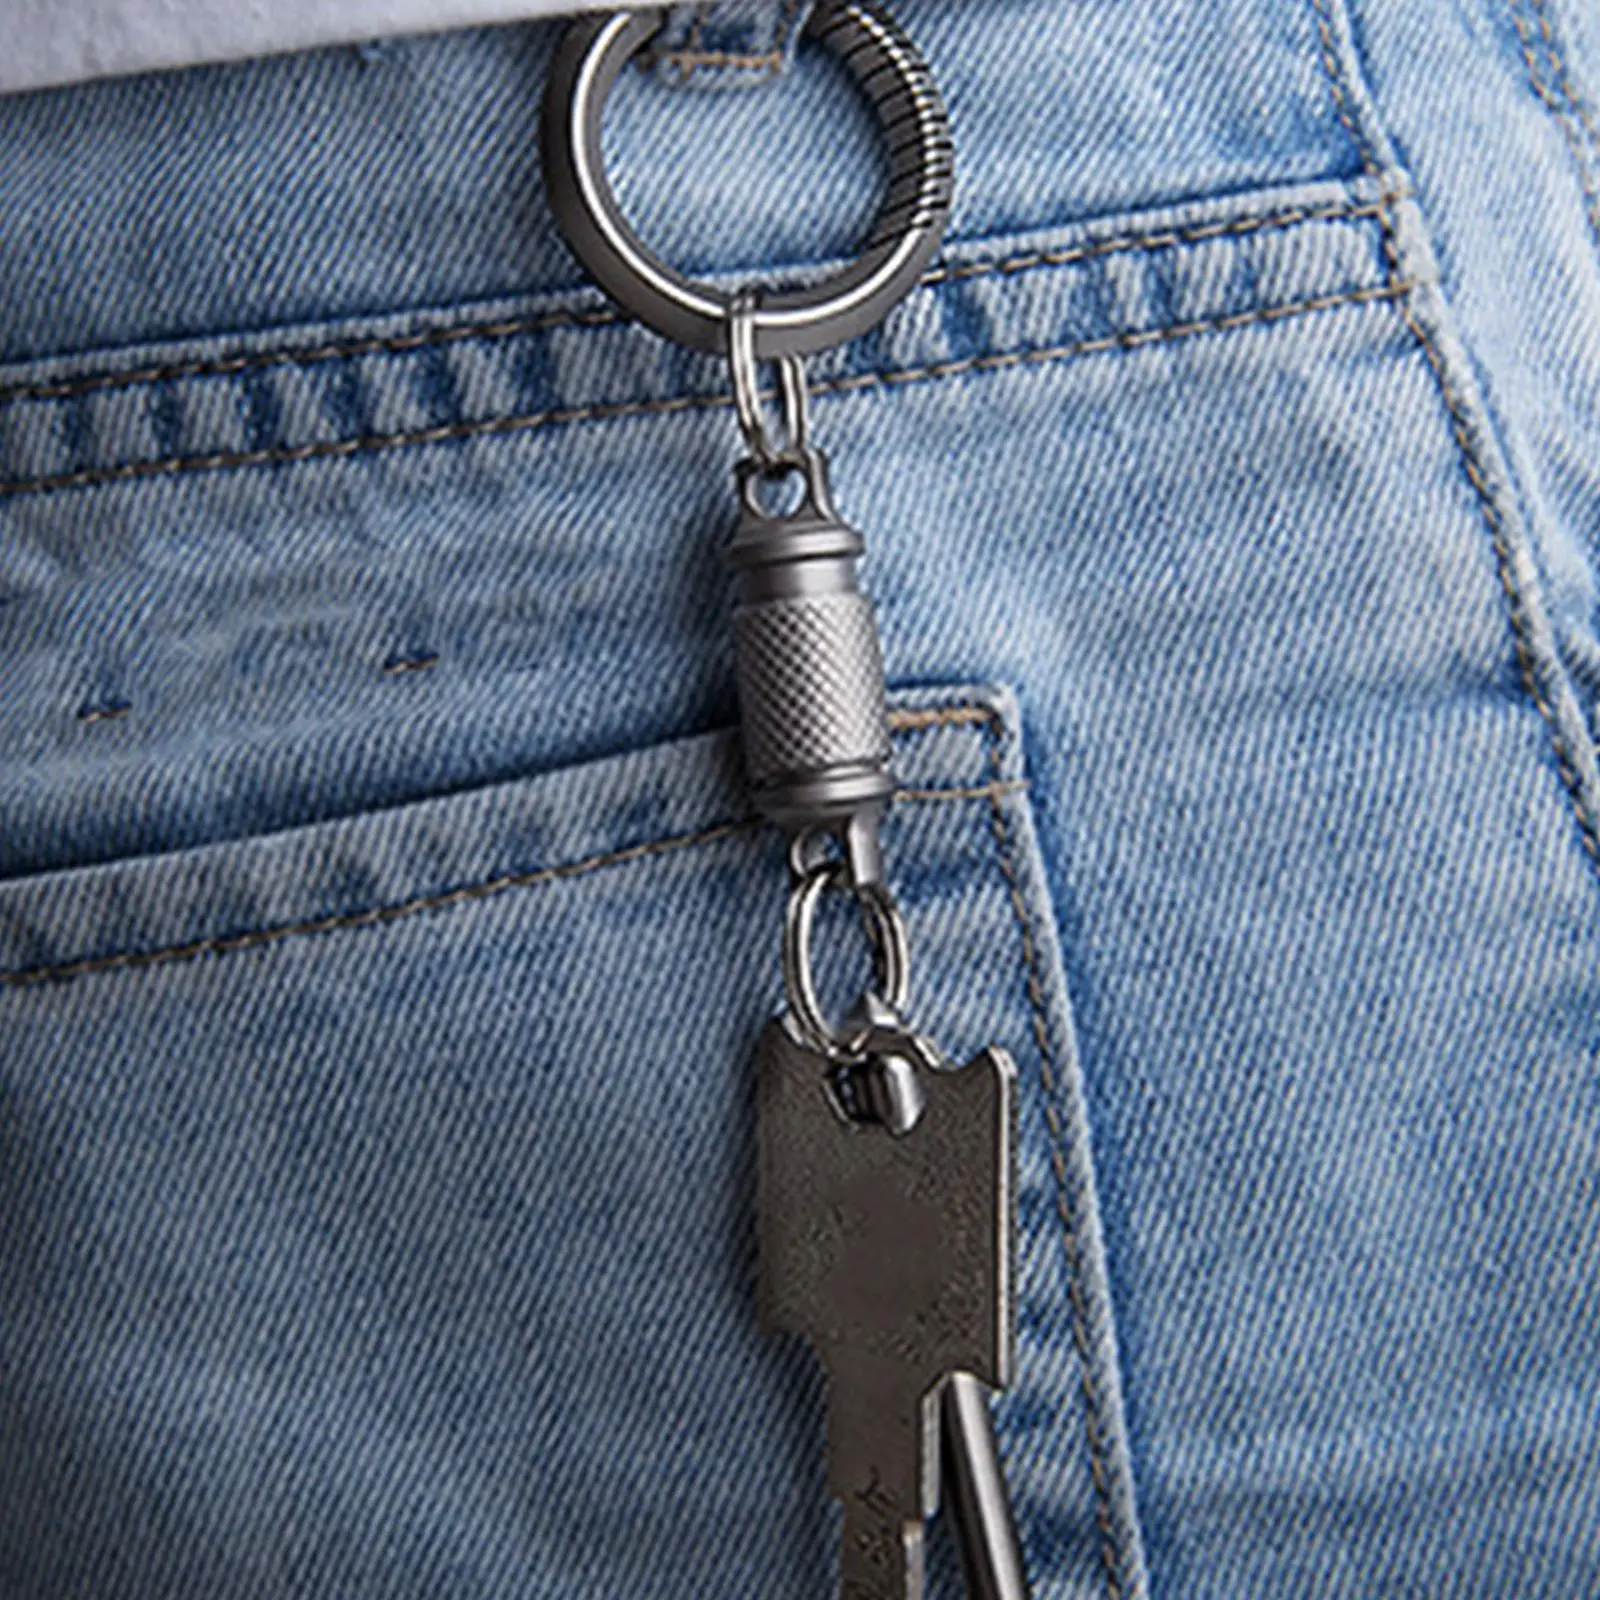 Titanium Alloy Keychain Keyring Detachable Portable Quick Buckle 360 Degree Rotation Clip for Waist Belt Outdoor Tool Unisex